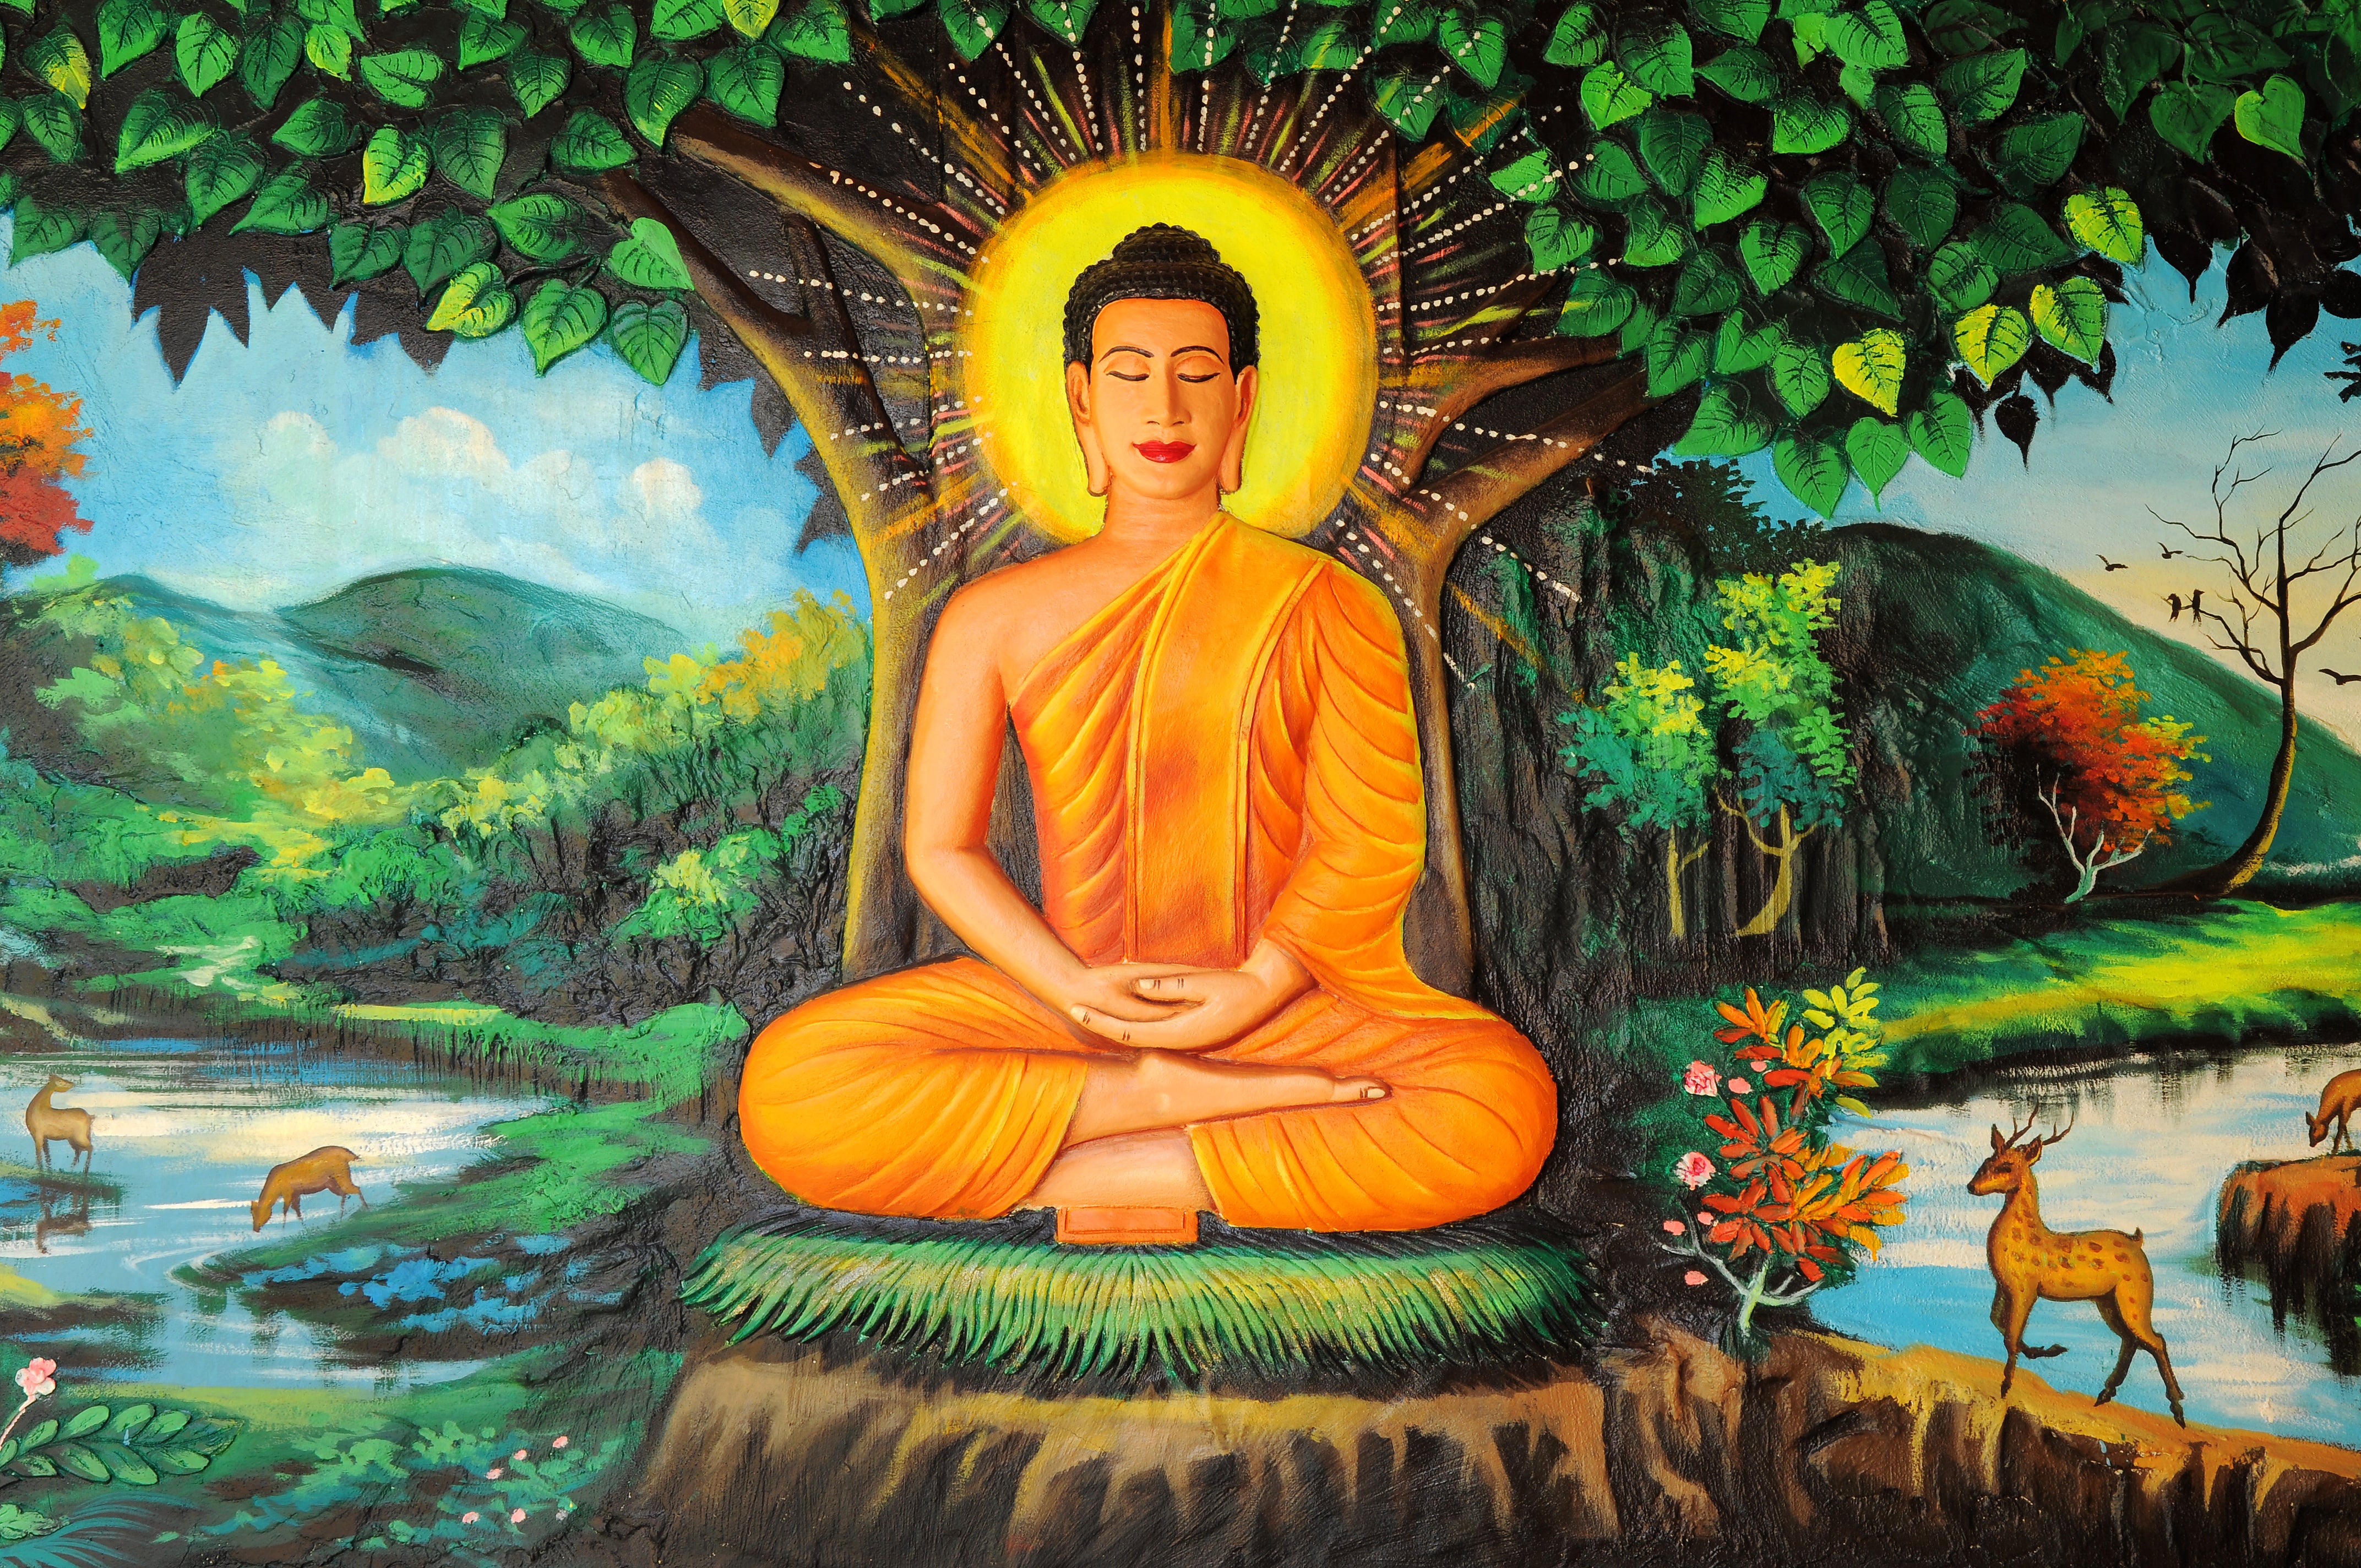 According to SN Goenka, Vipassana is how the Buddha found his way to the top of the spiritual mountain